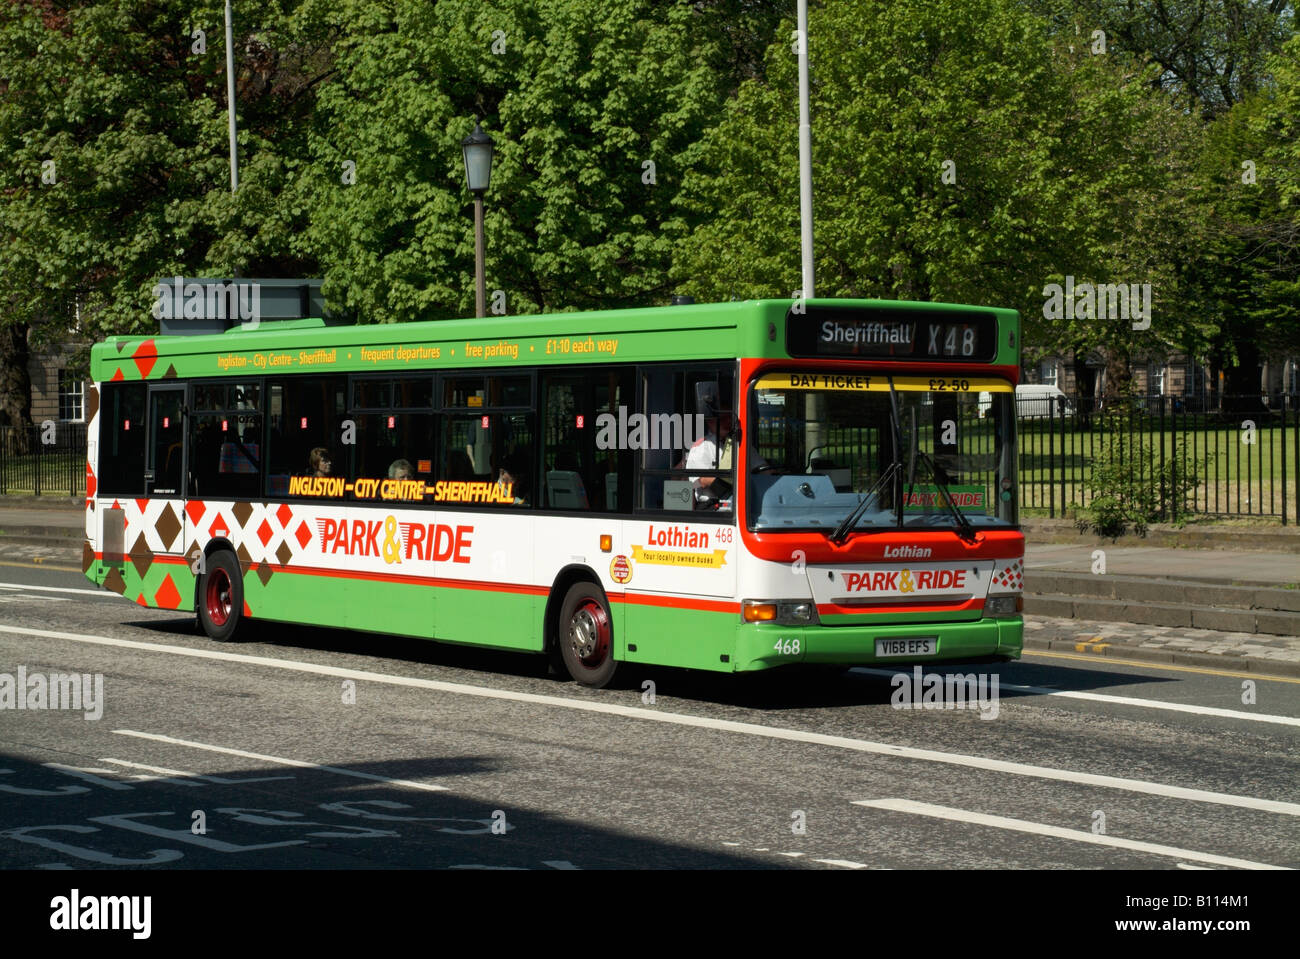 A Park & Ride bus in Edinburgh Stock Photo